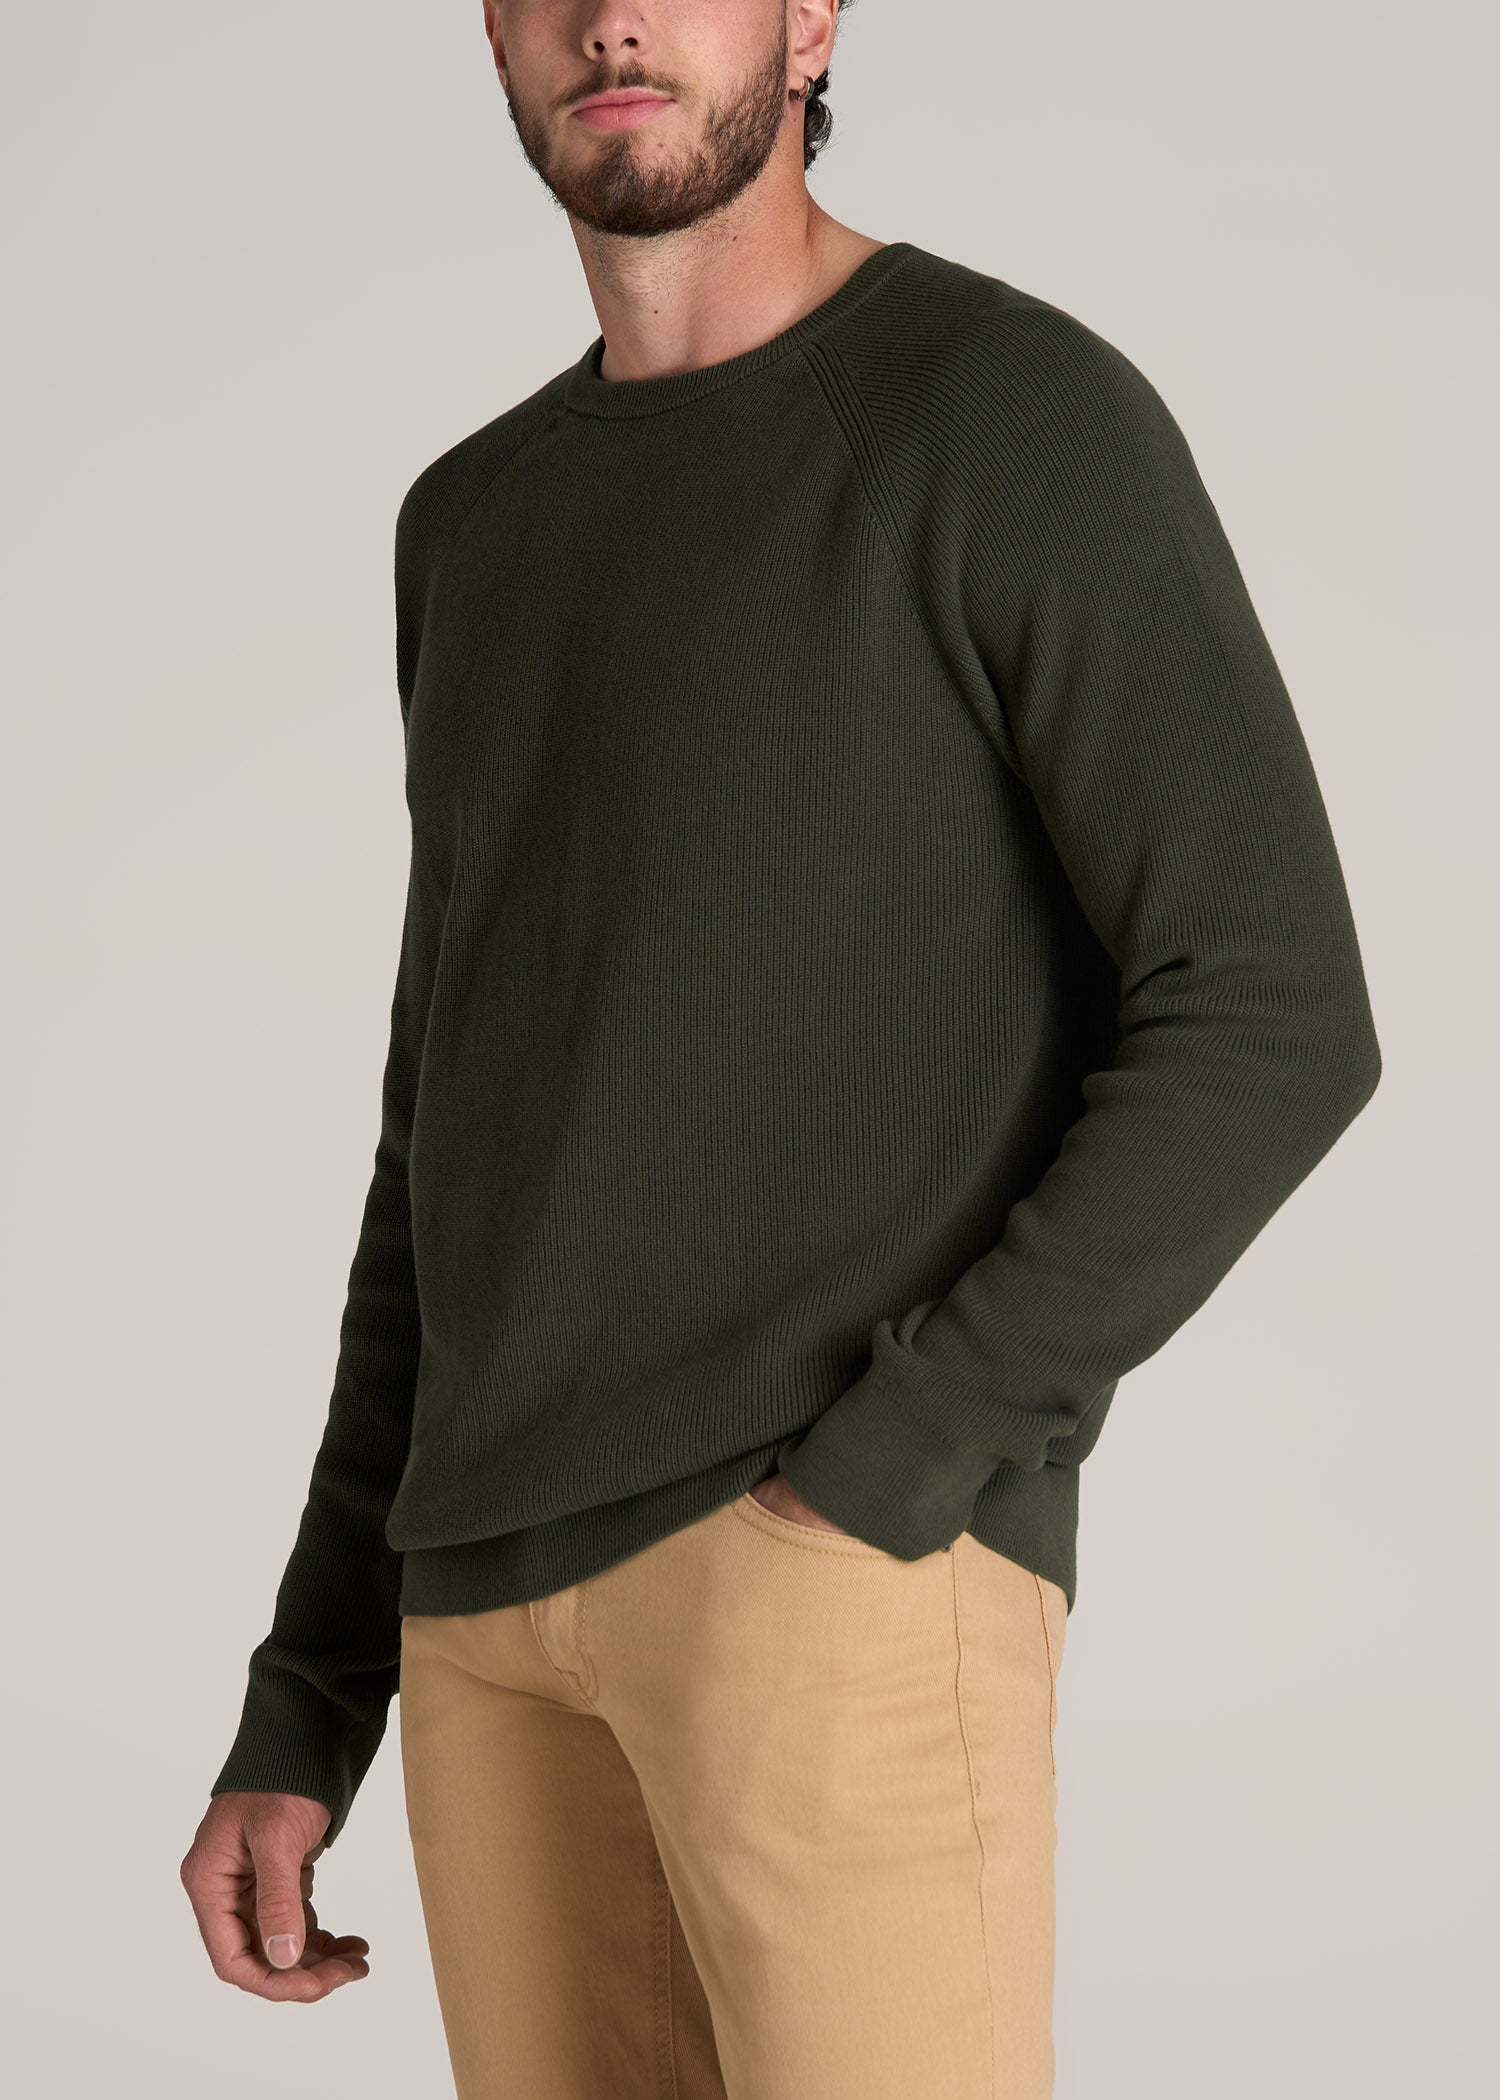 American-Tall-Men-Textured-Knit-Sweater-Dark-Olive-Green-side